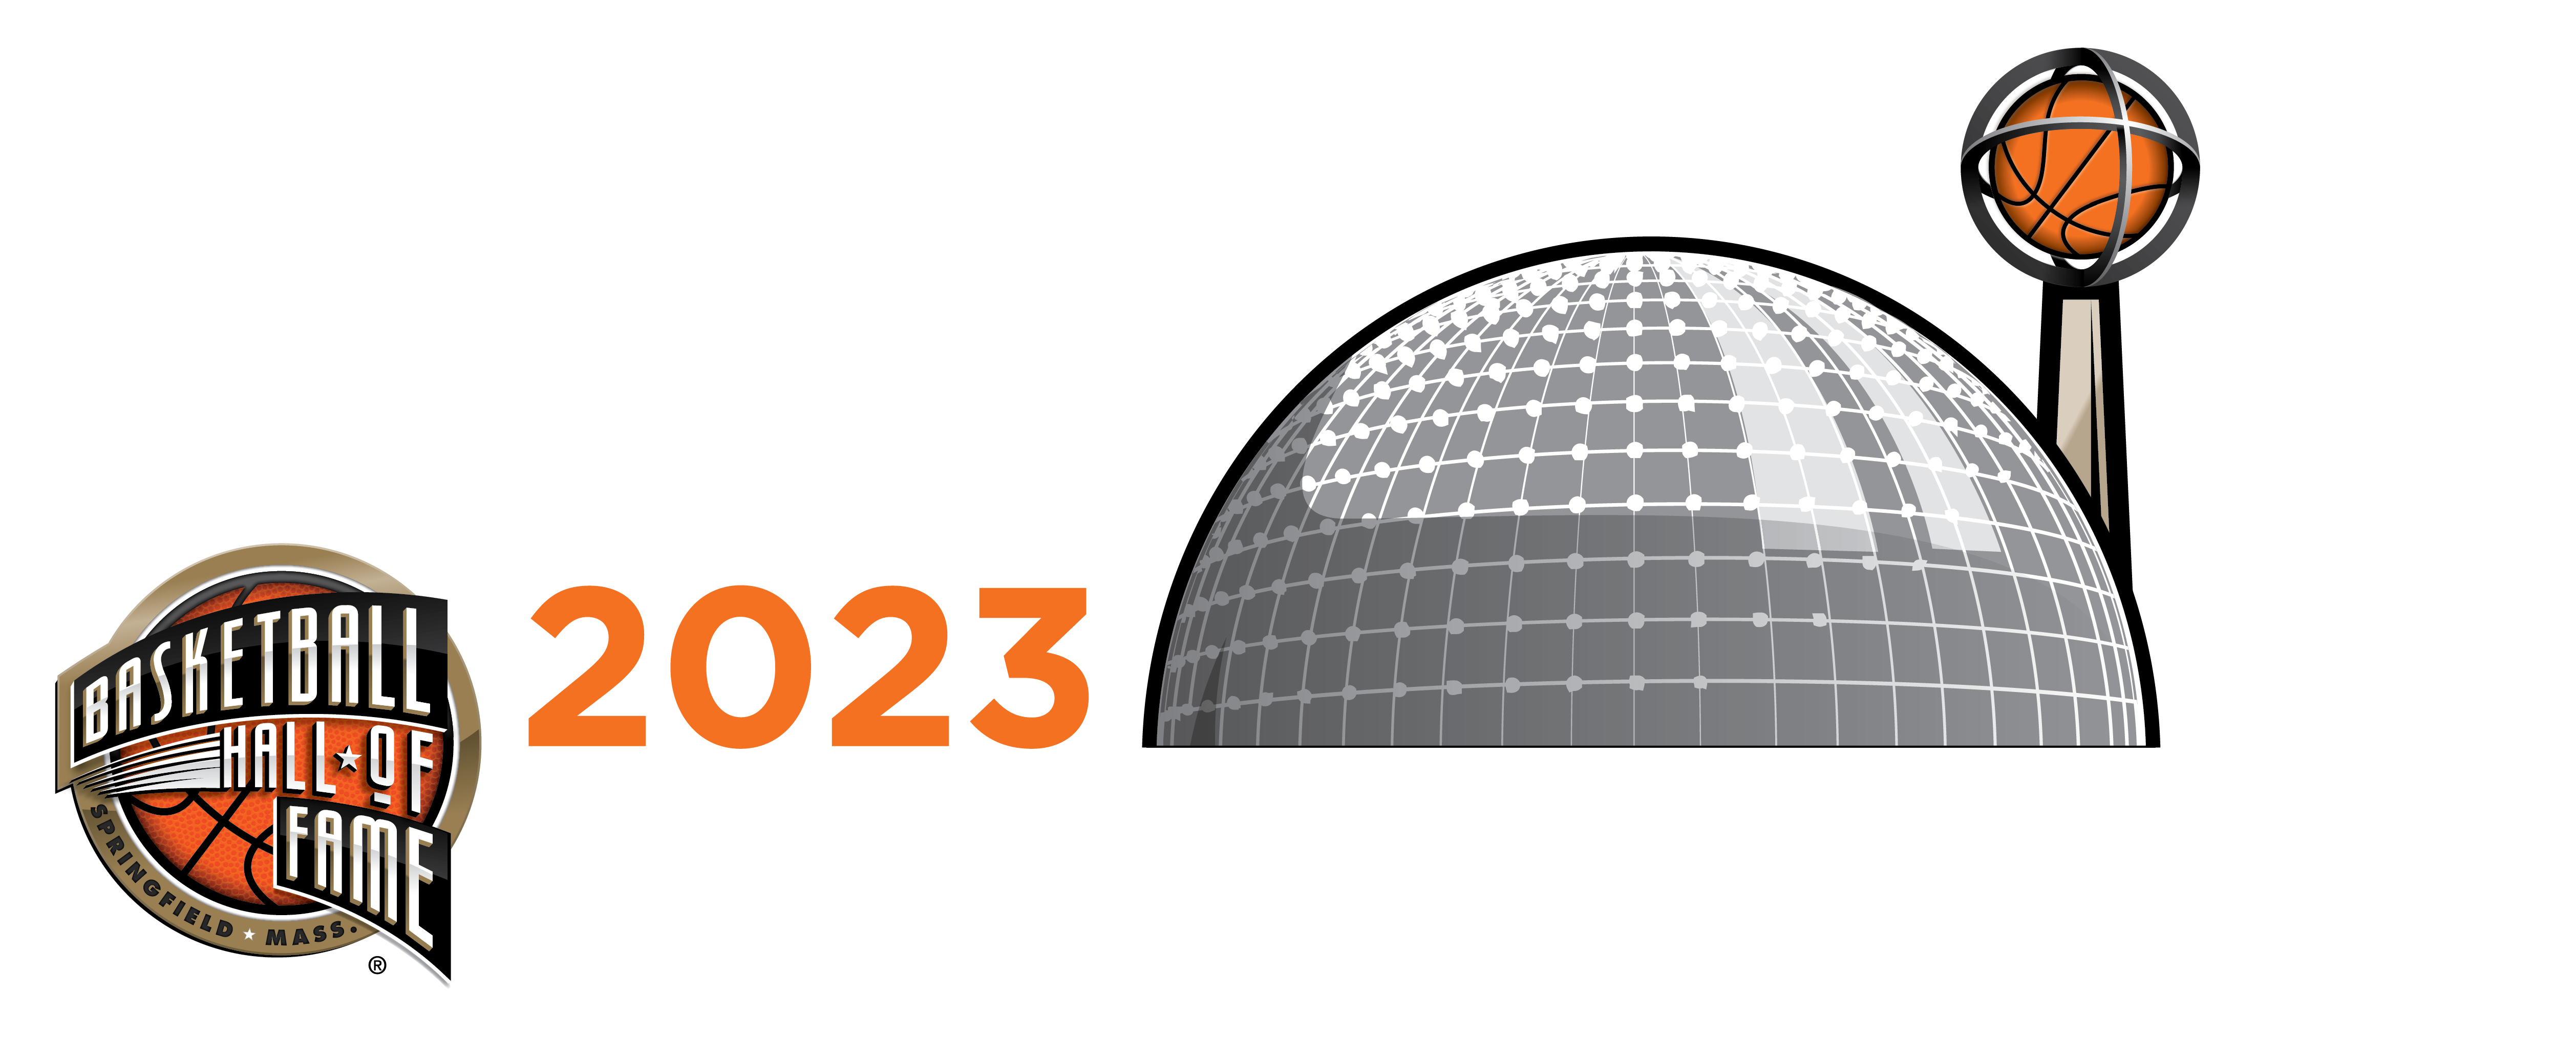 Enshrinement 2023 Event Logo